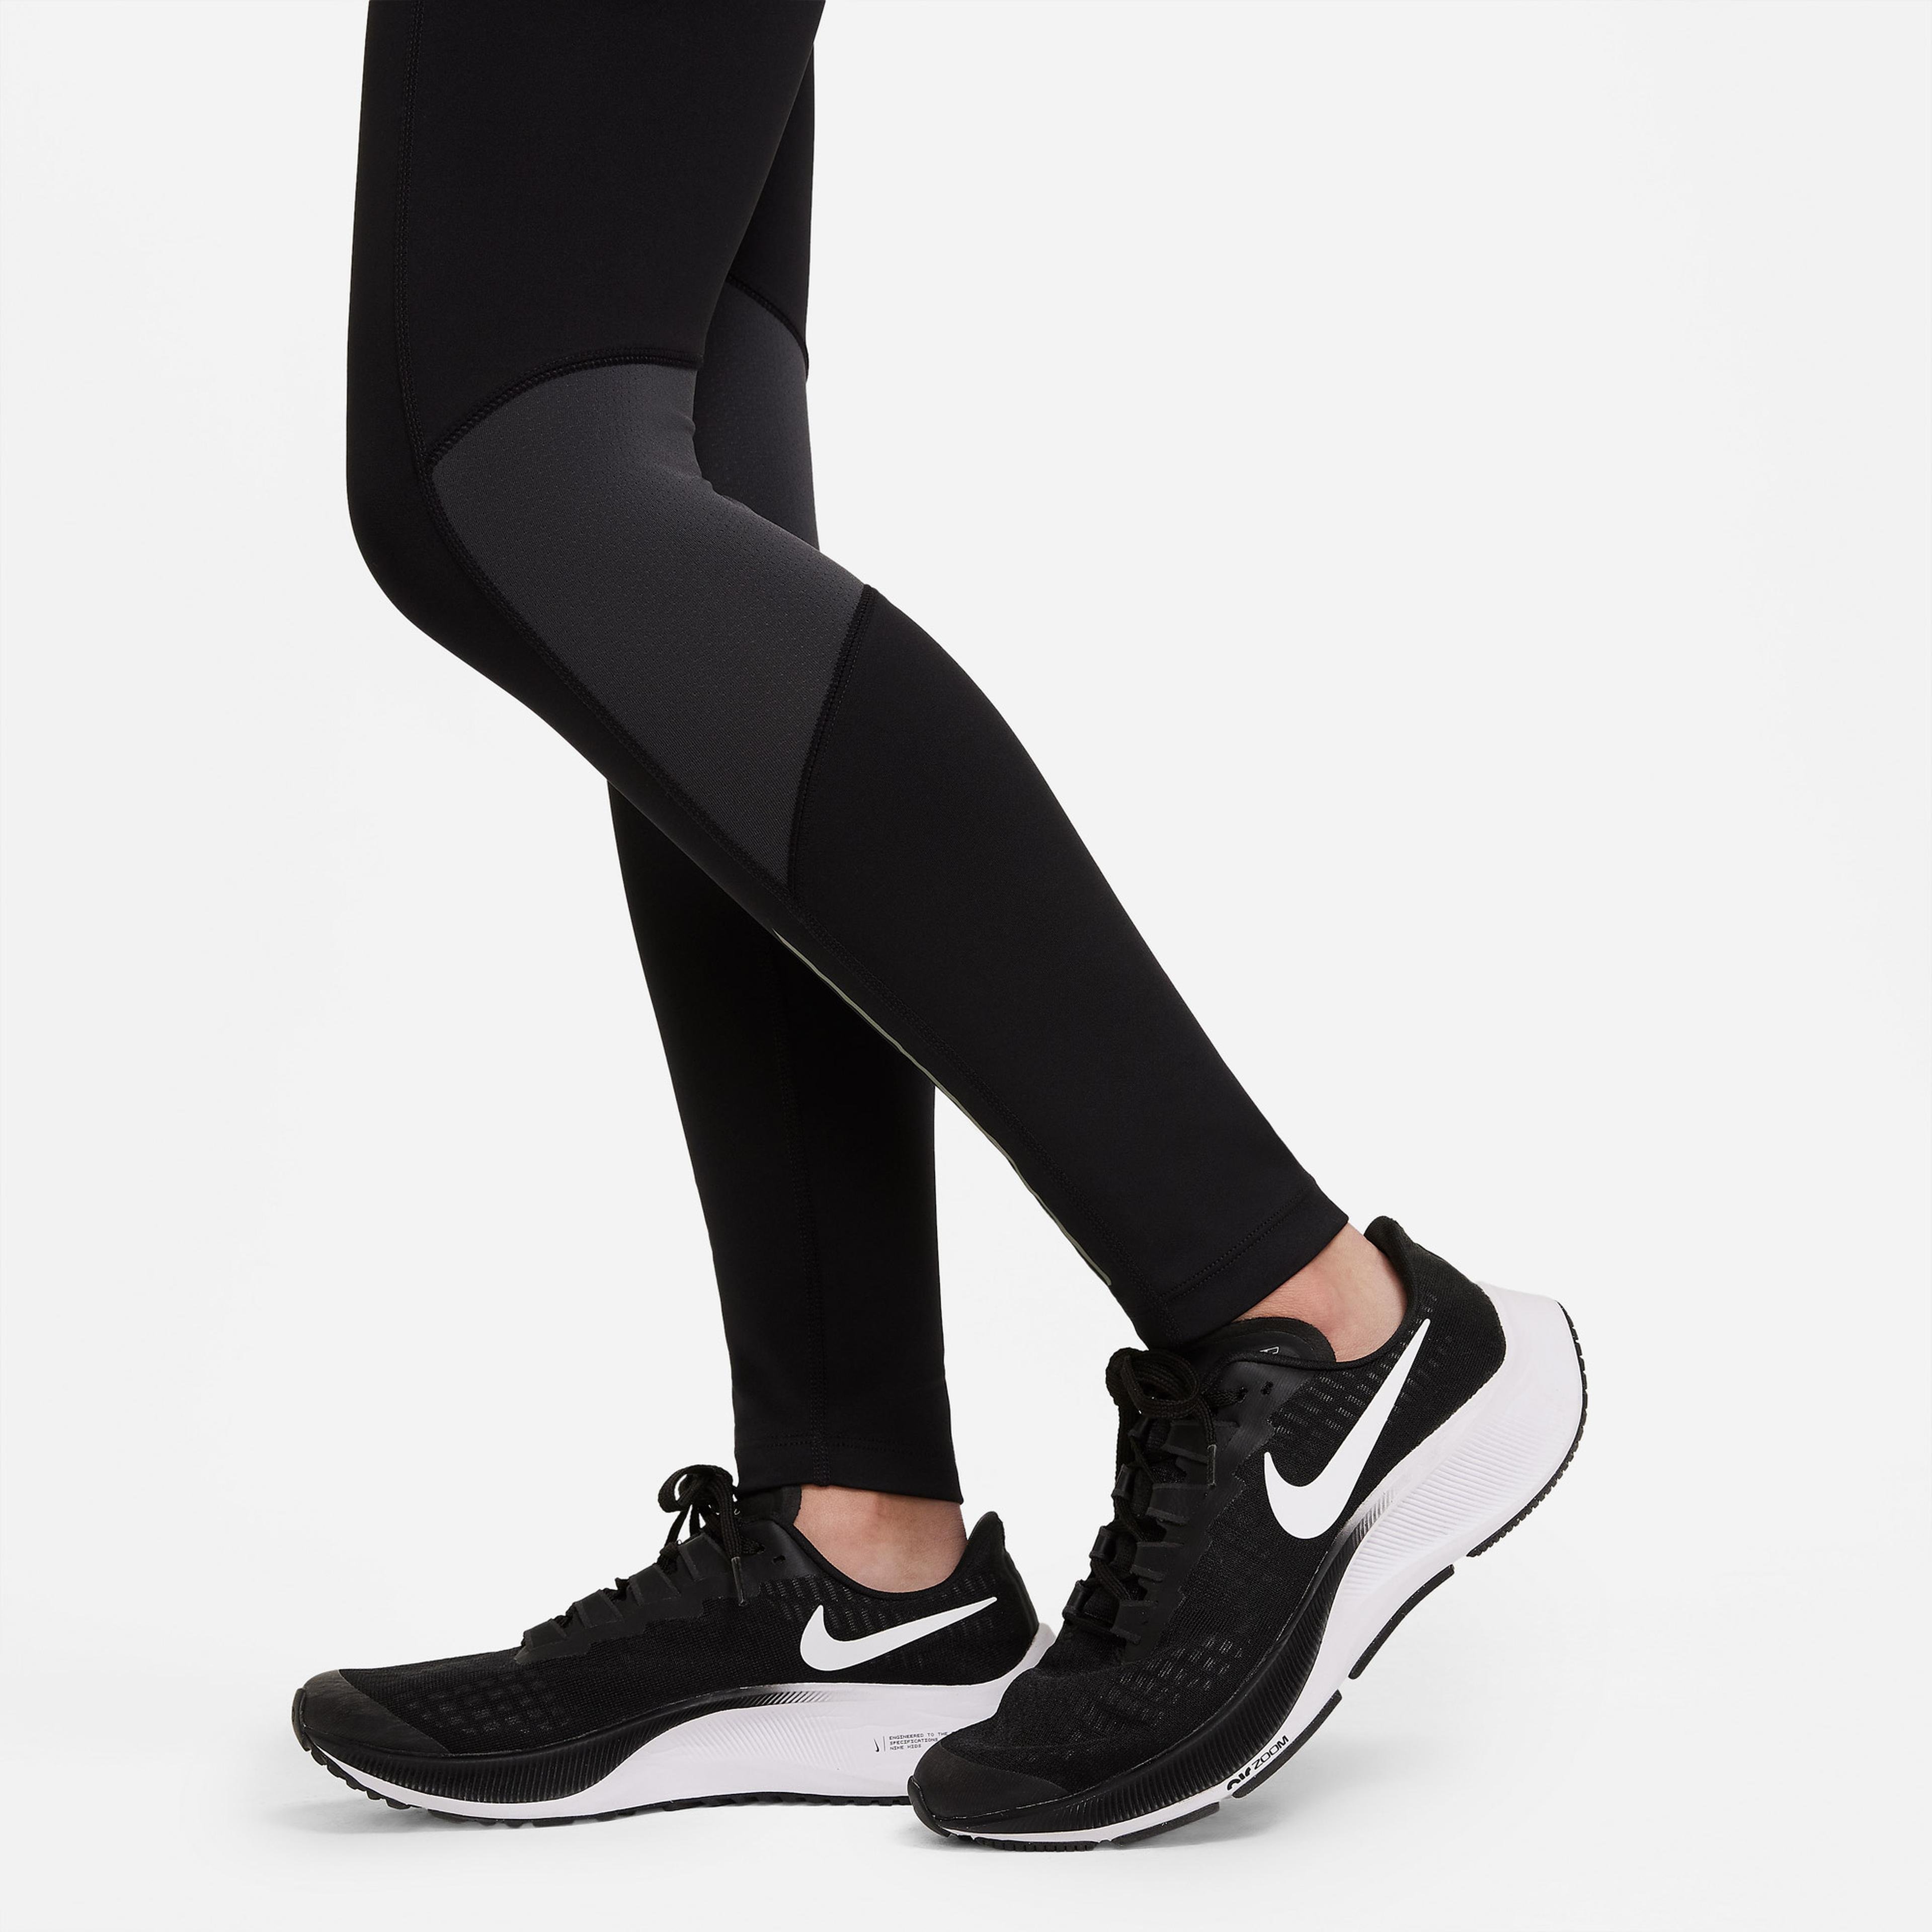 Nike Dri-FIT Air Çocuk Siyah Tayt